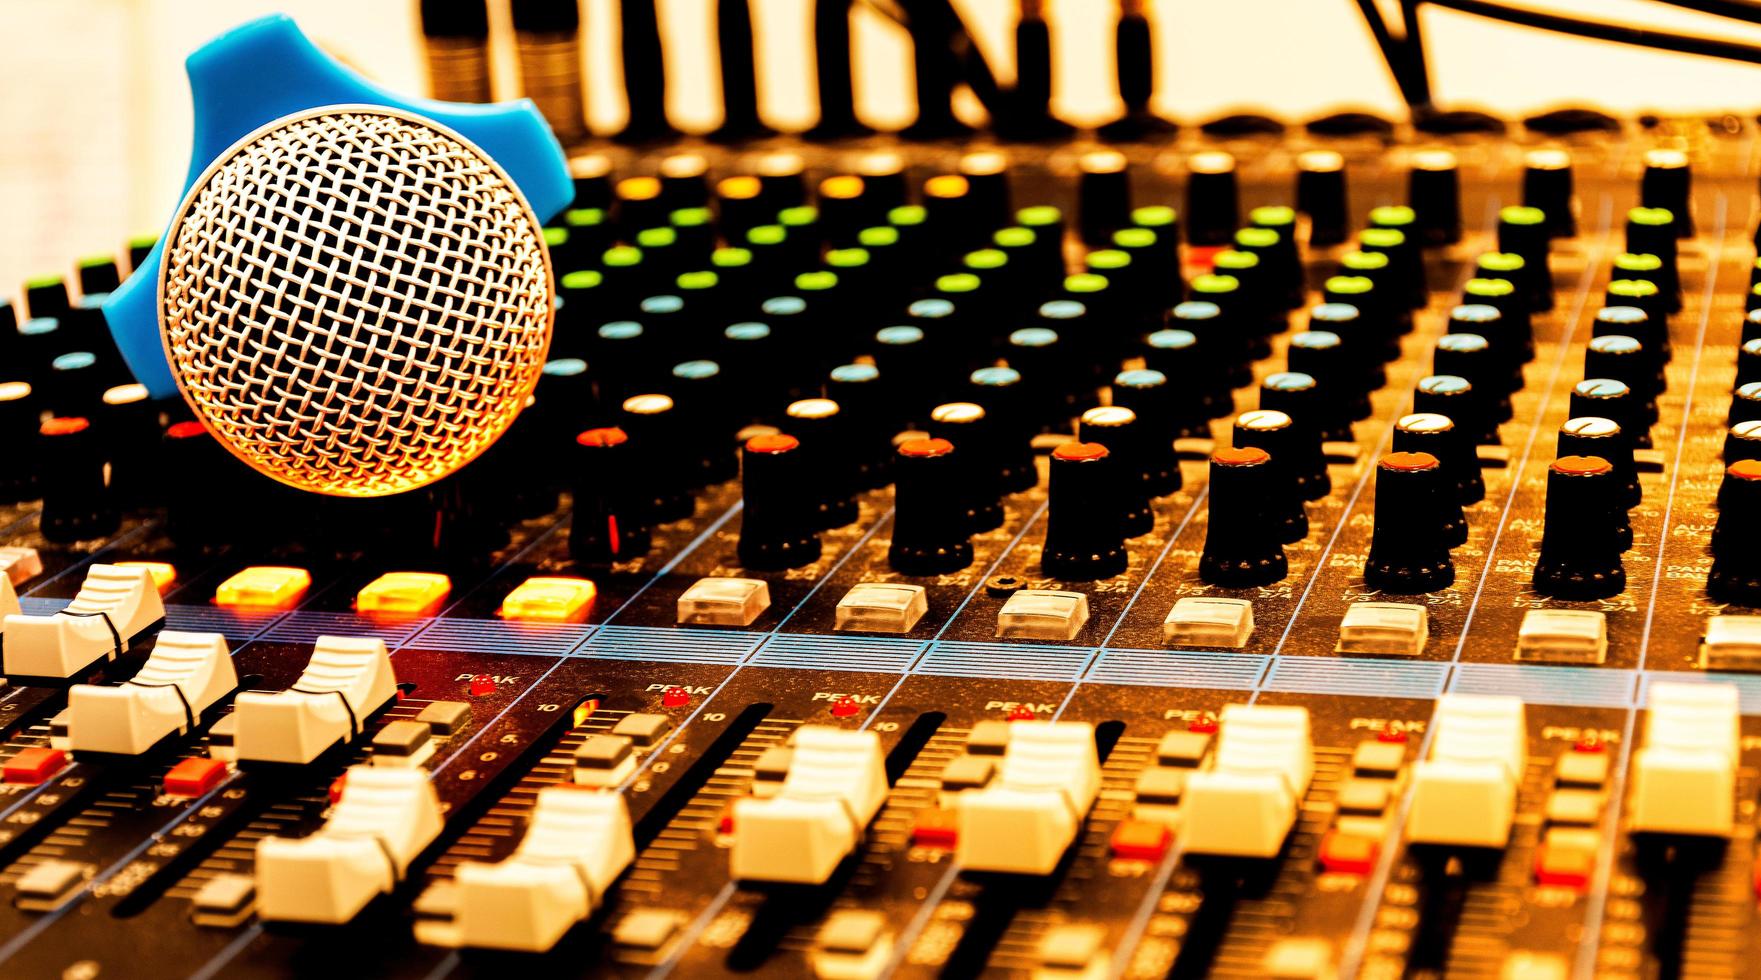 Mikrofon am Mixer der Konsolen-Soundkarte foto